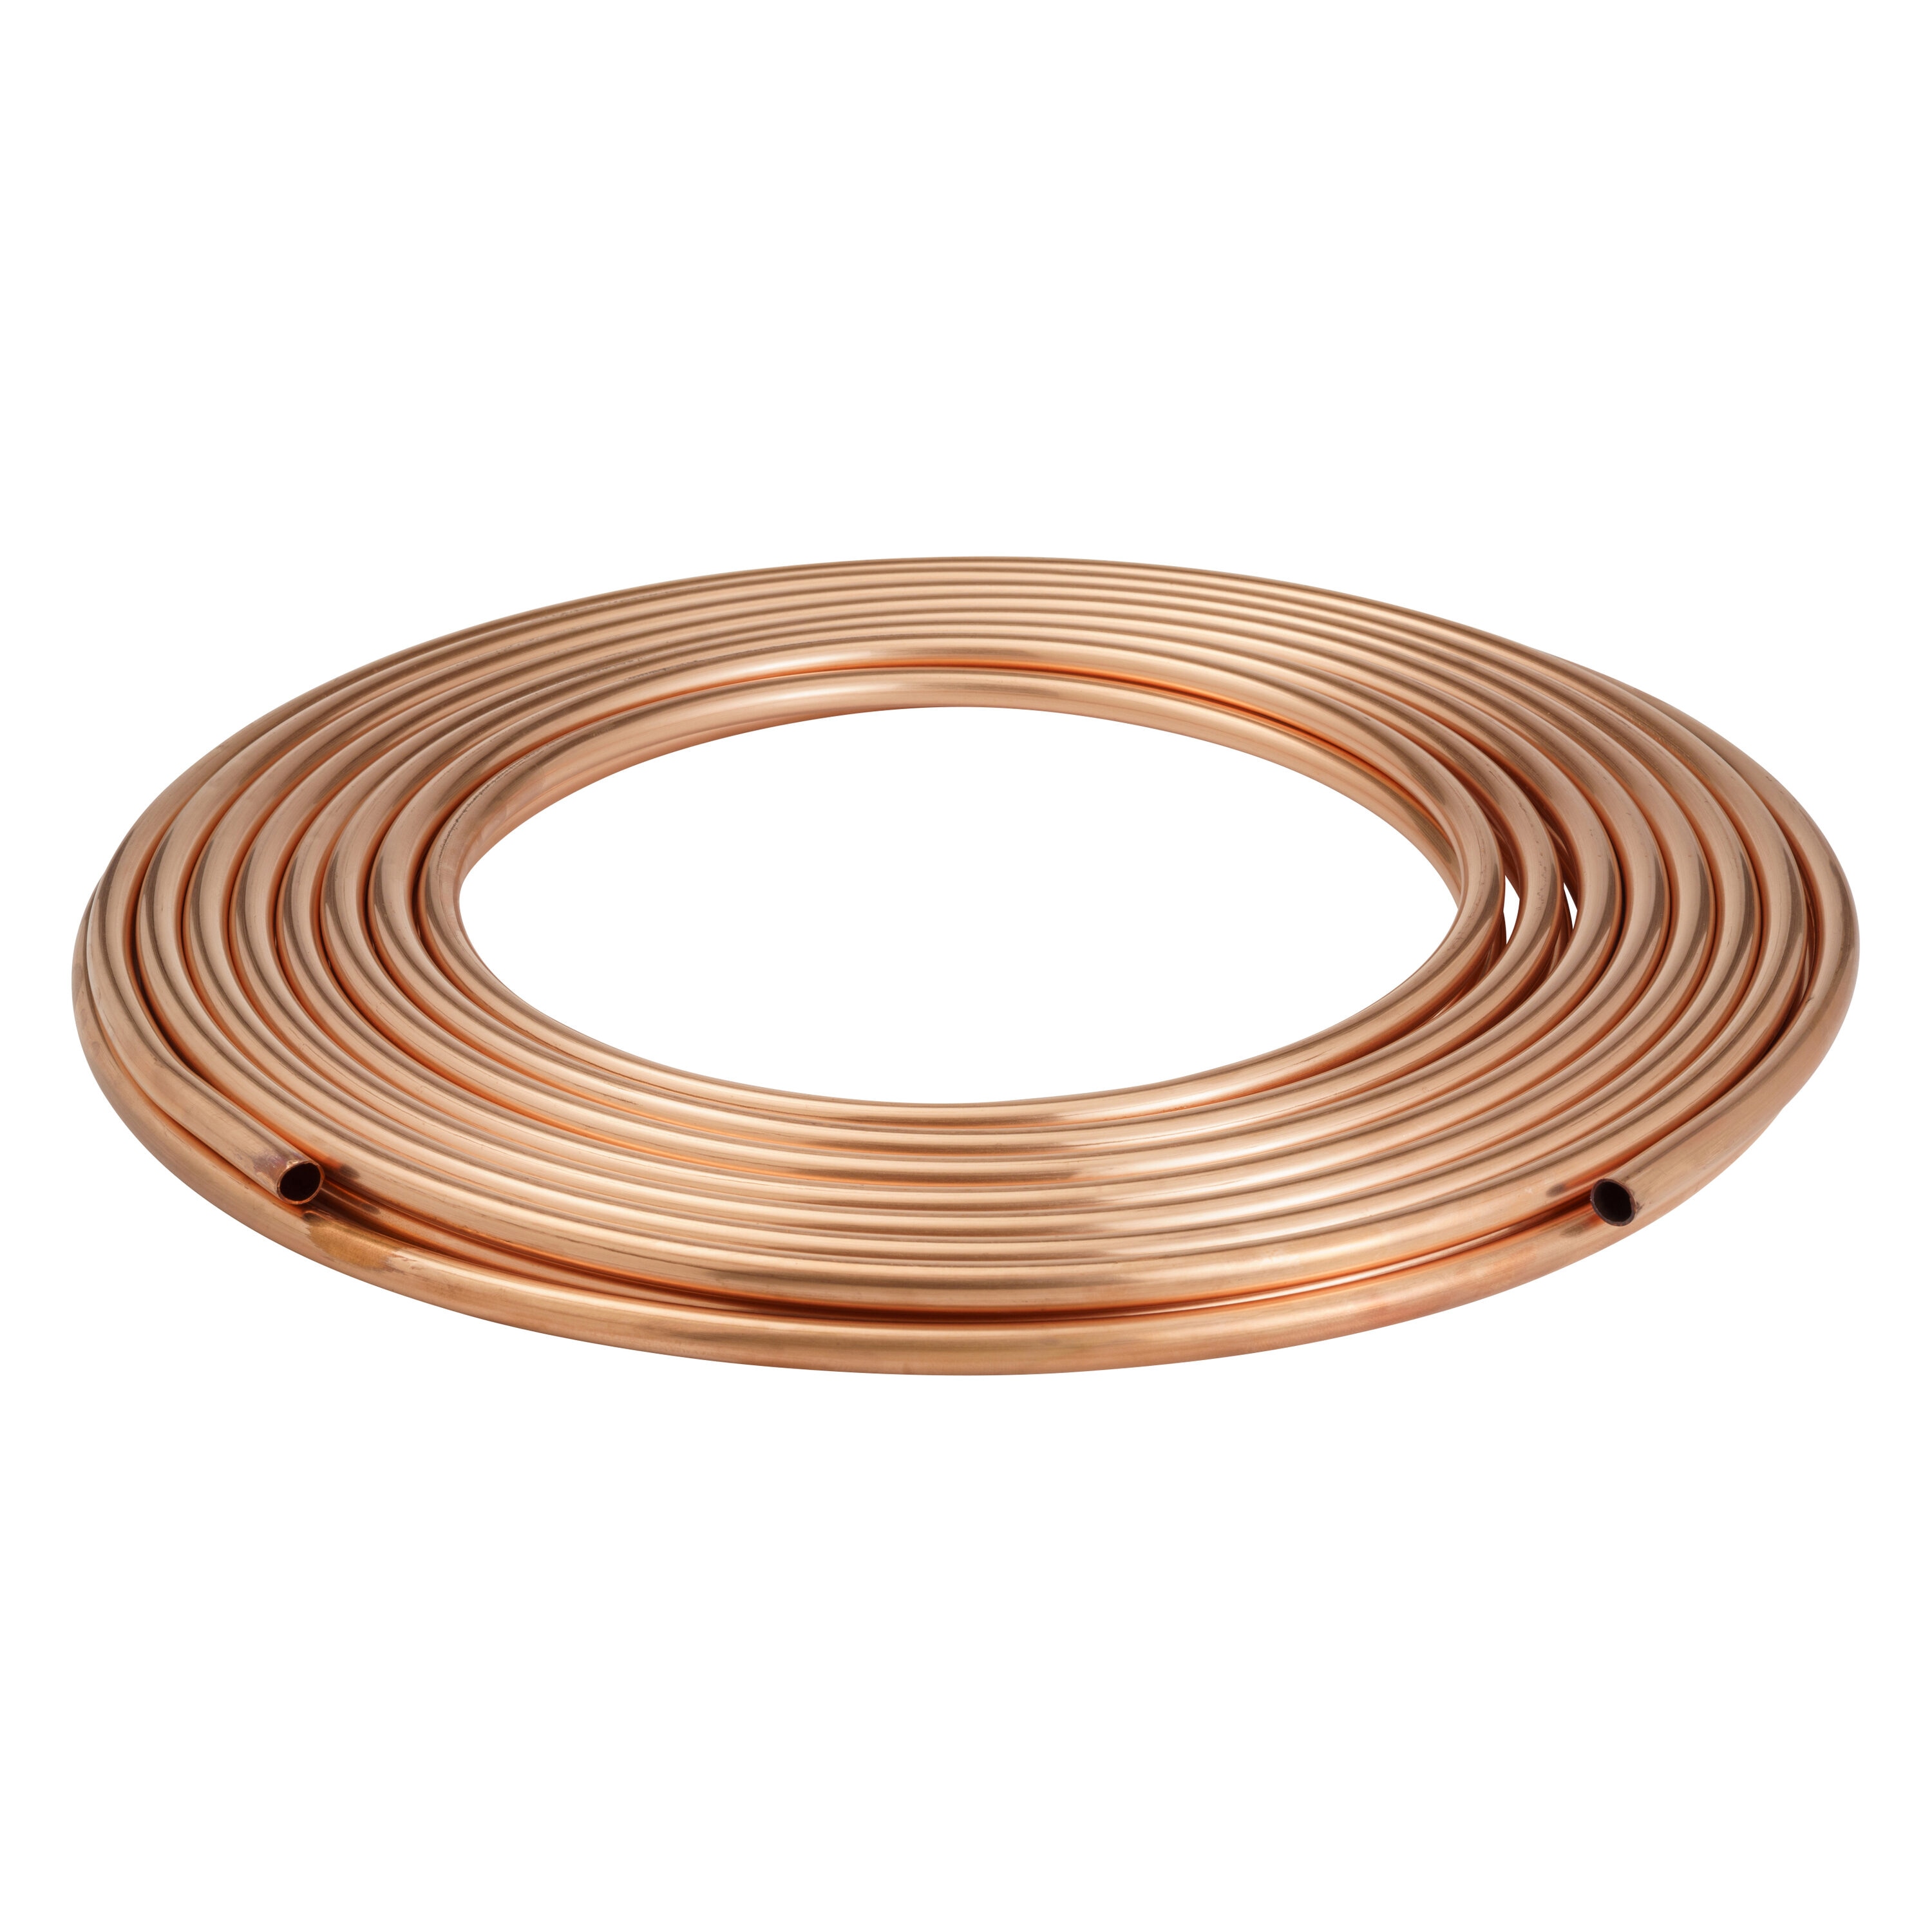 Streamline 1/2-in x 10-ft Copper Type L Pipe in the Copper Pipe